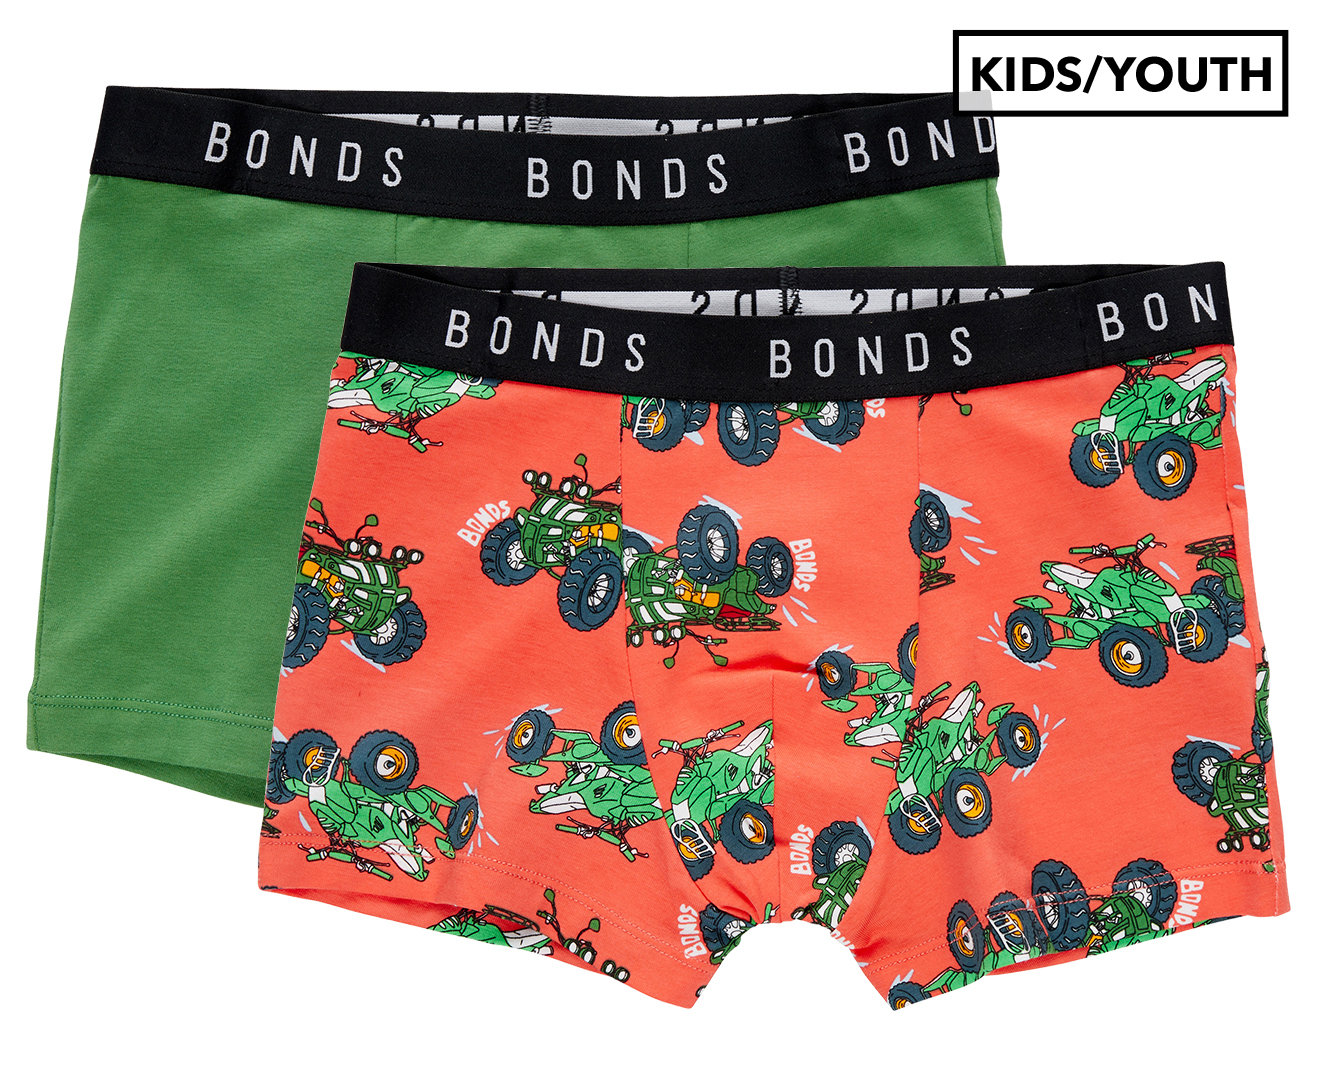 Pouch Underwear, Hipsters/Trunks, Mechanics Green